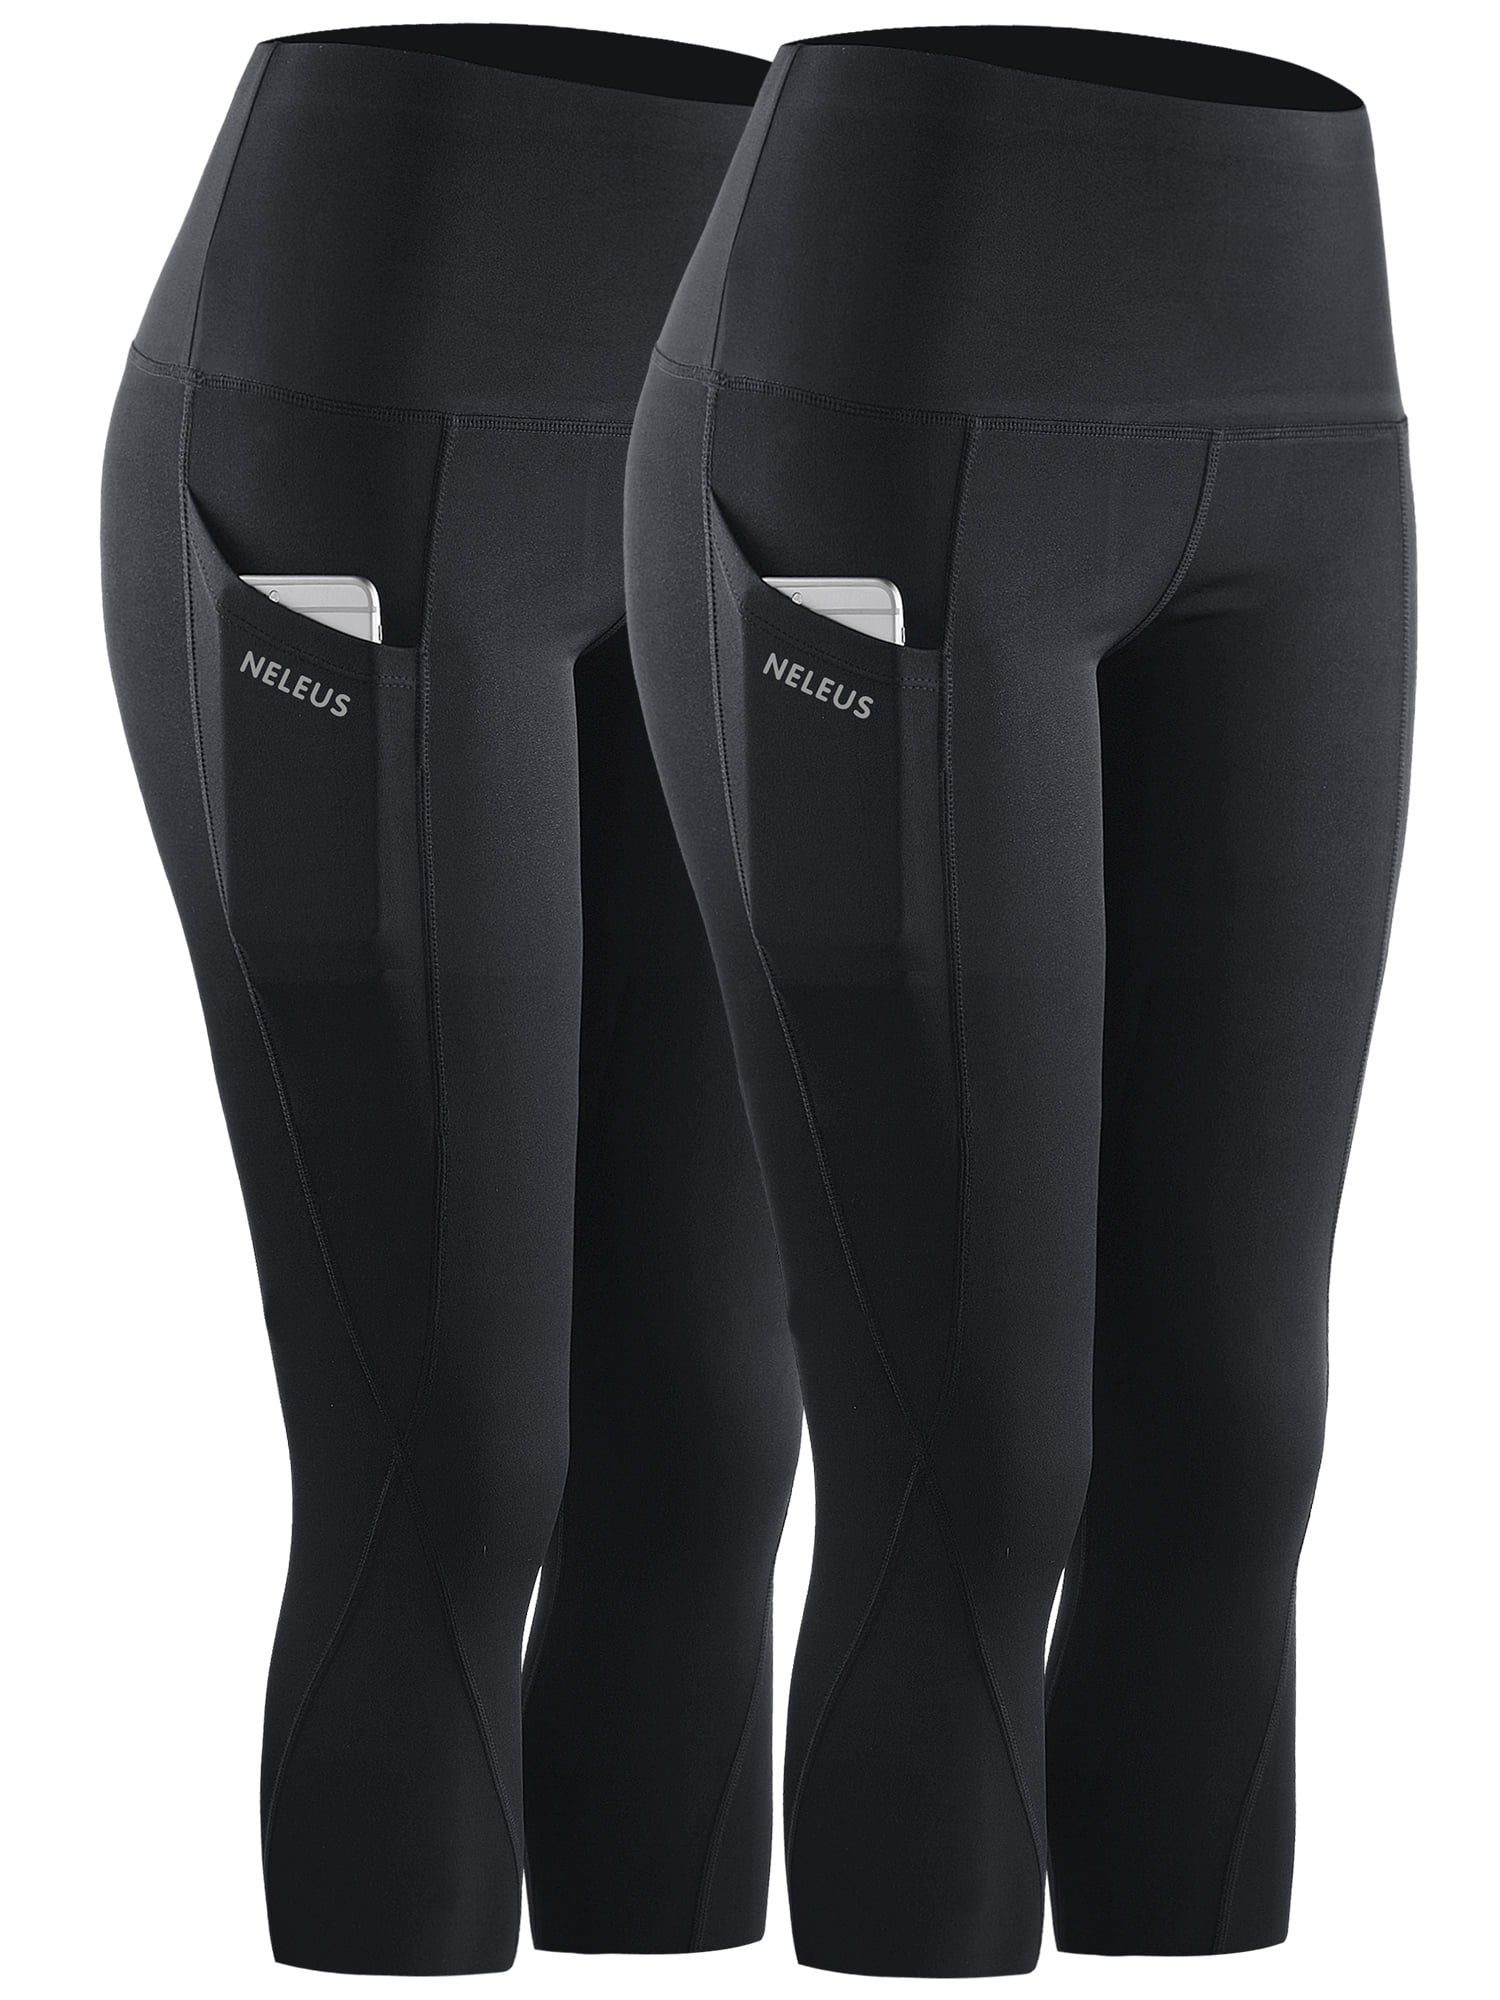 FarmaCell BodyShaper 609Y (Black, L) Shapewear for Women Tummy Control,  Anti Cellulite Leggings, Slimming, Shaping, High Waist 